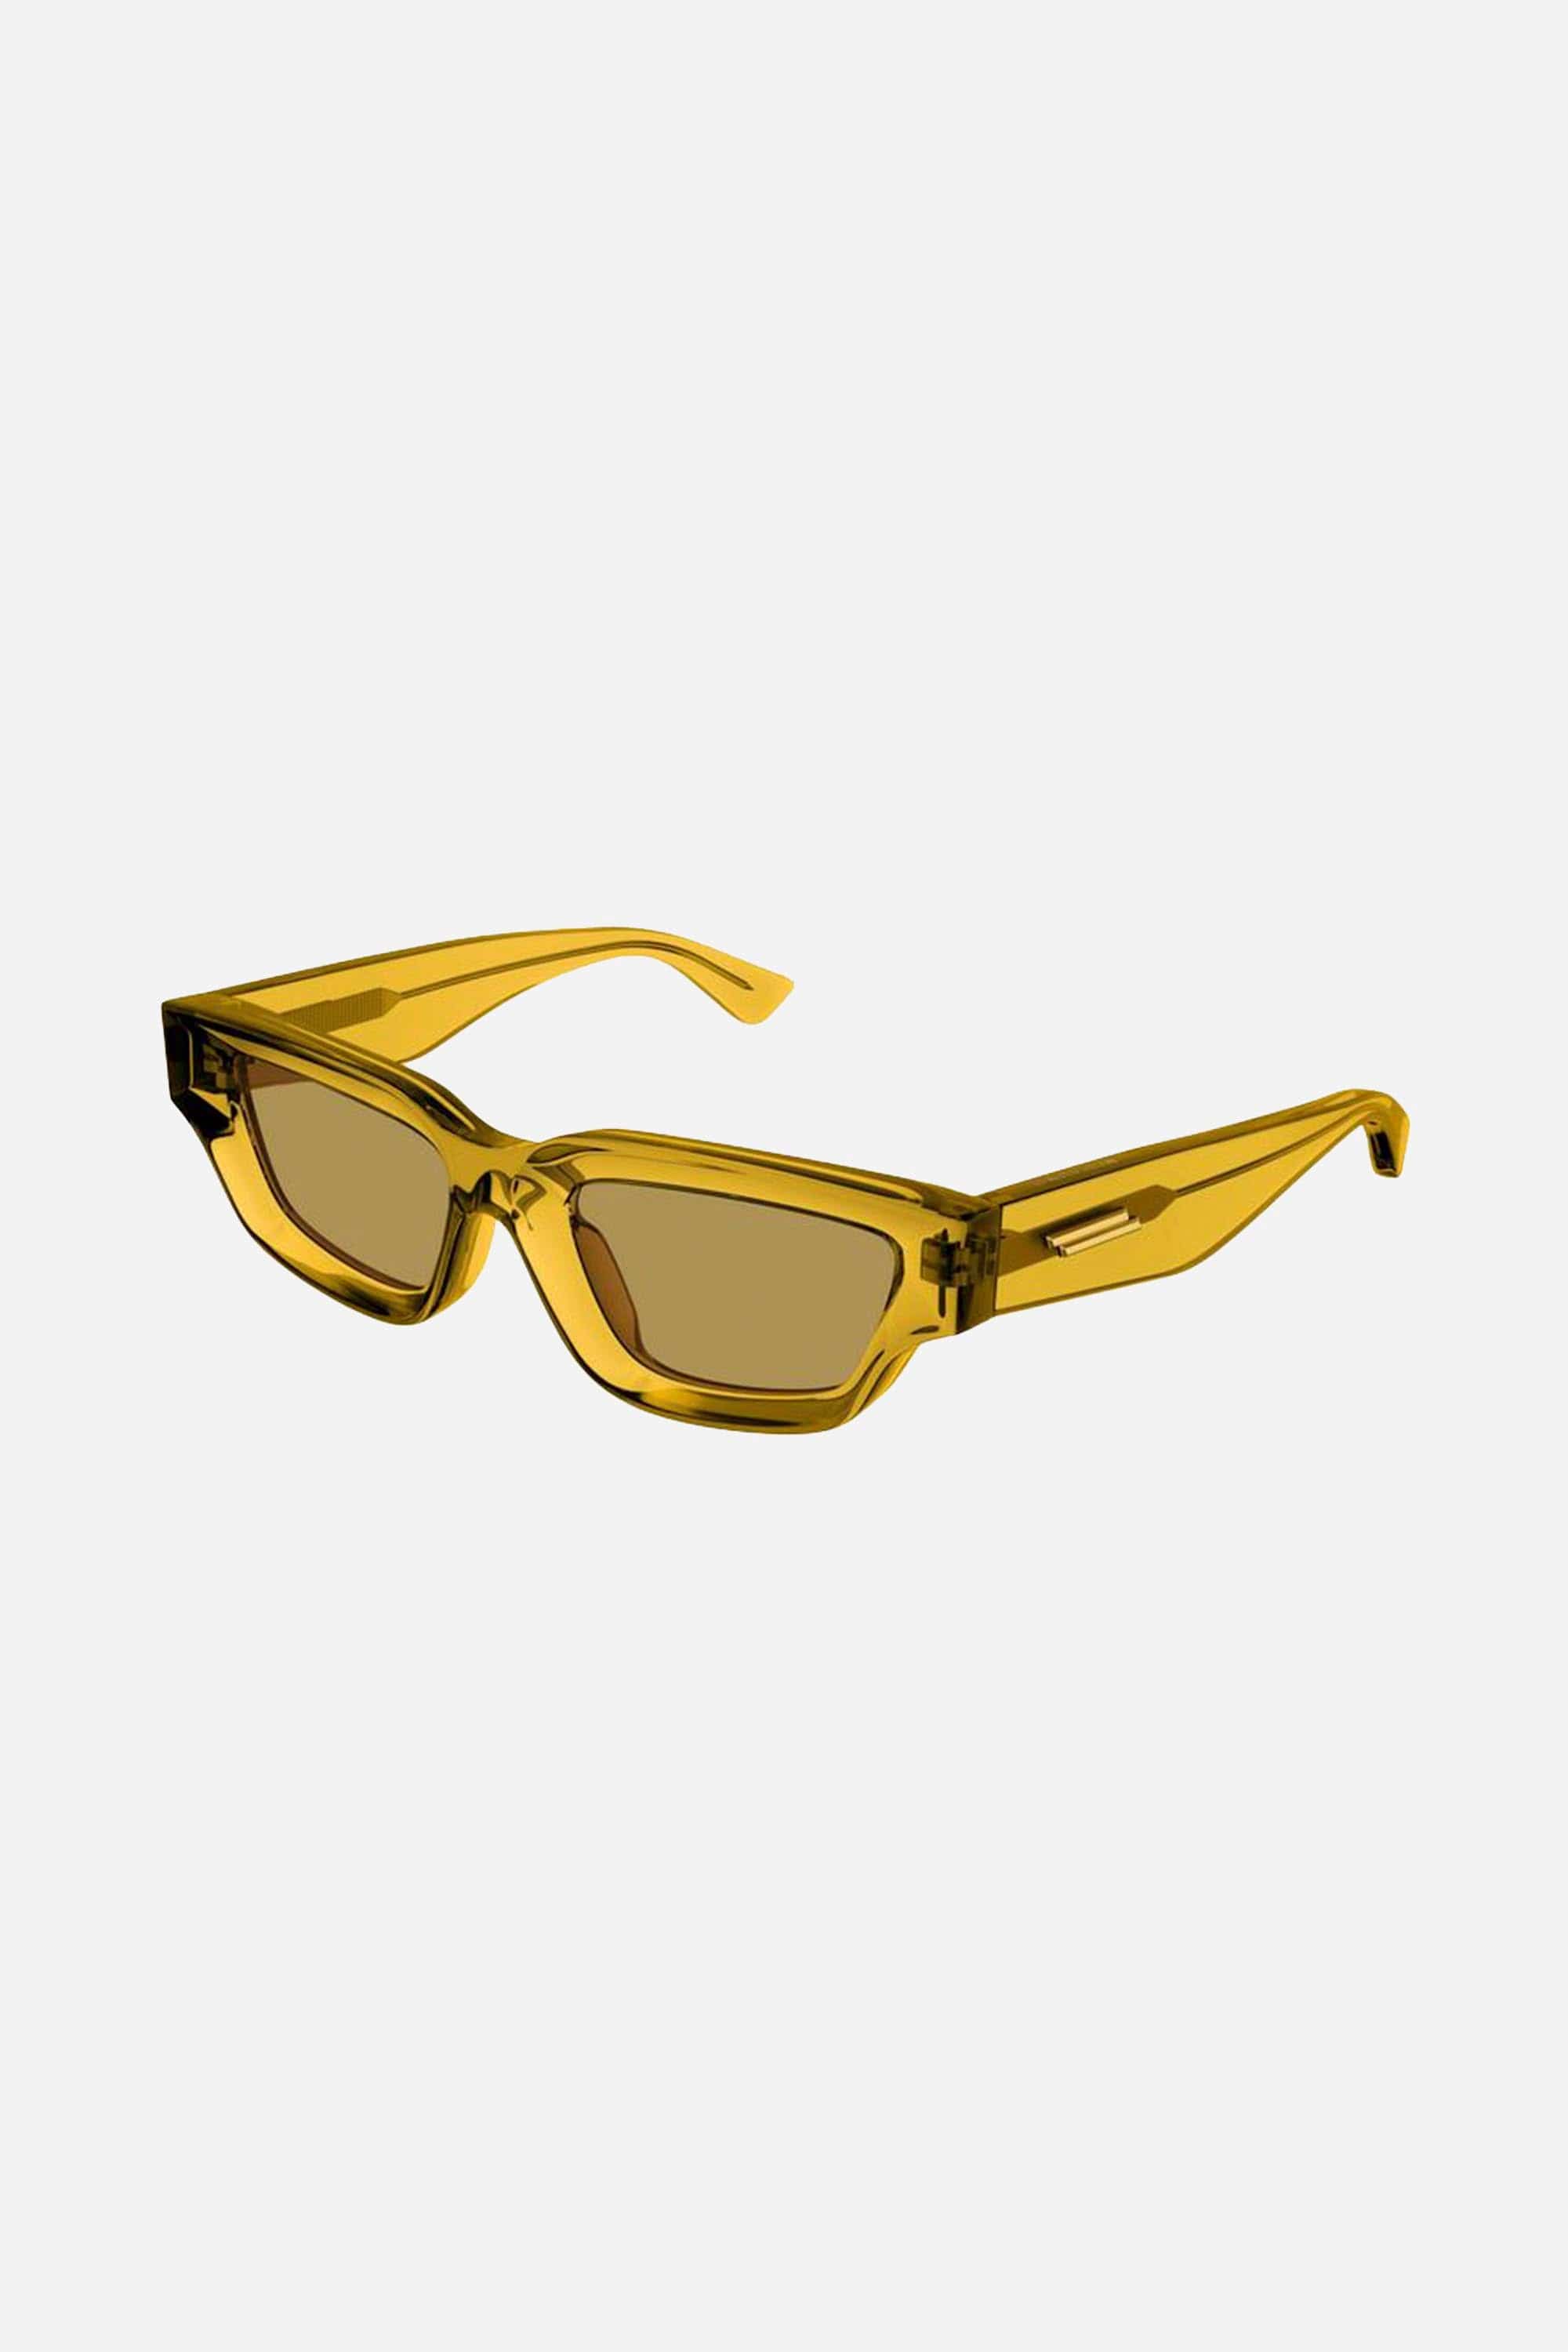 Bottega Veneta micro rectangular yellow sunglasses - Eyewear Club